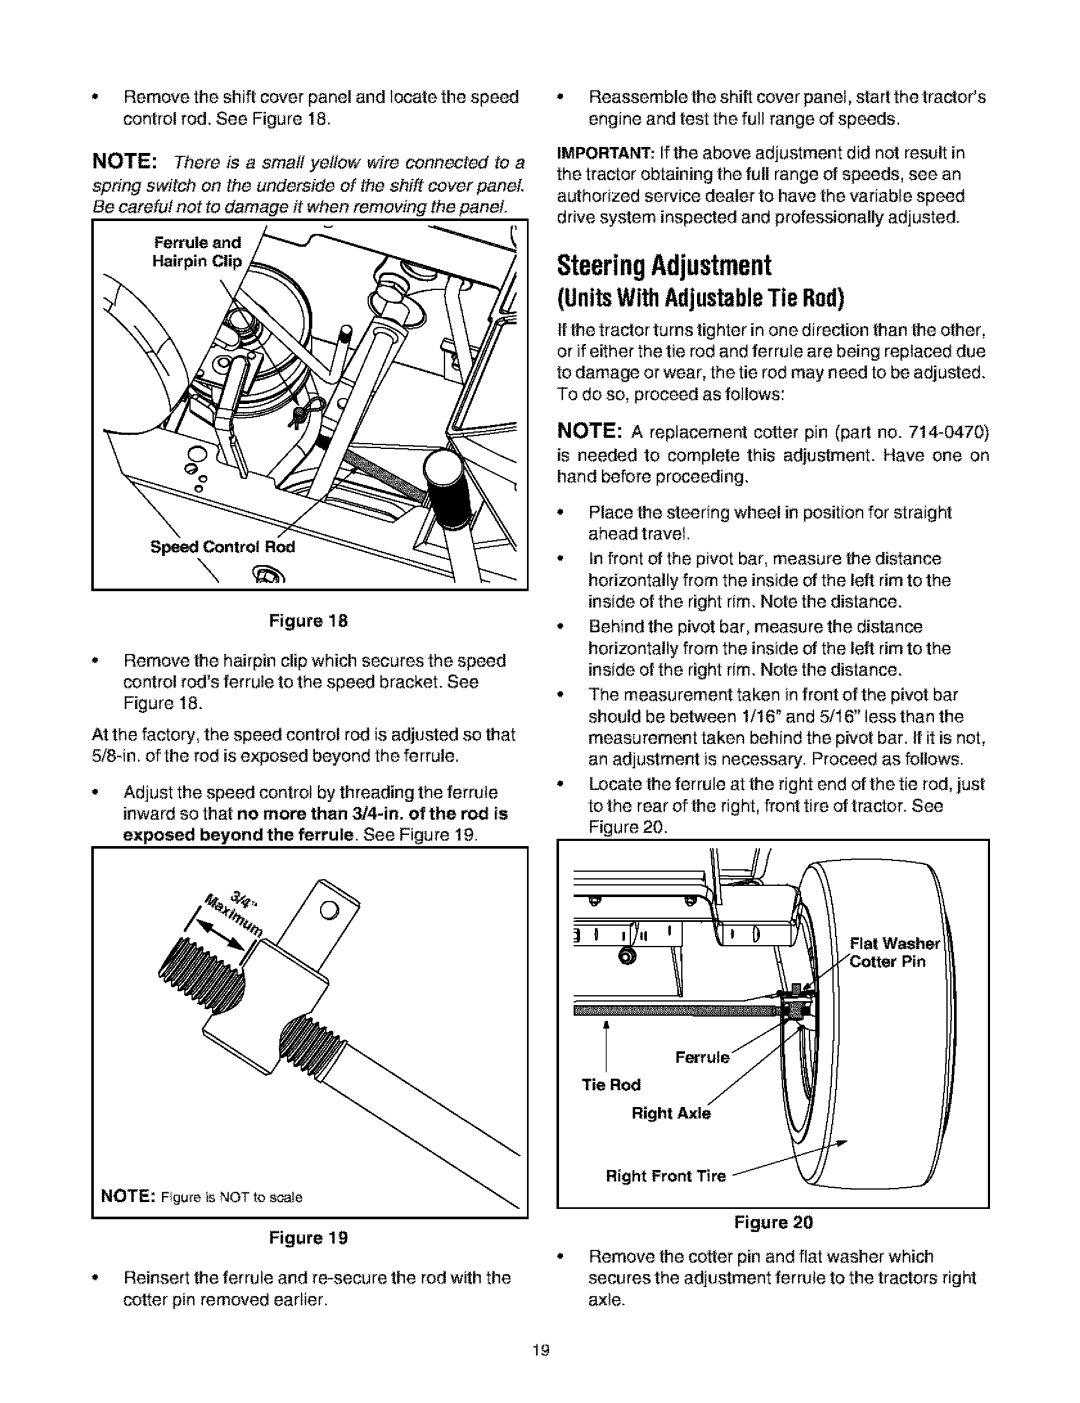 Bolens 660 manual SteeringAdjustment, UnitsWithAdjustableTie Rod, Ferrule and Hairpin Clip Speed Control Rod Figure 